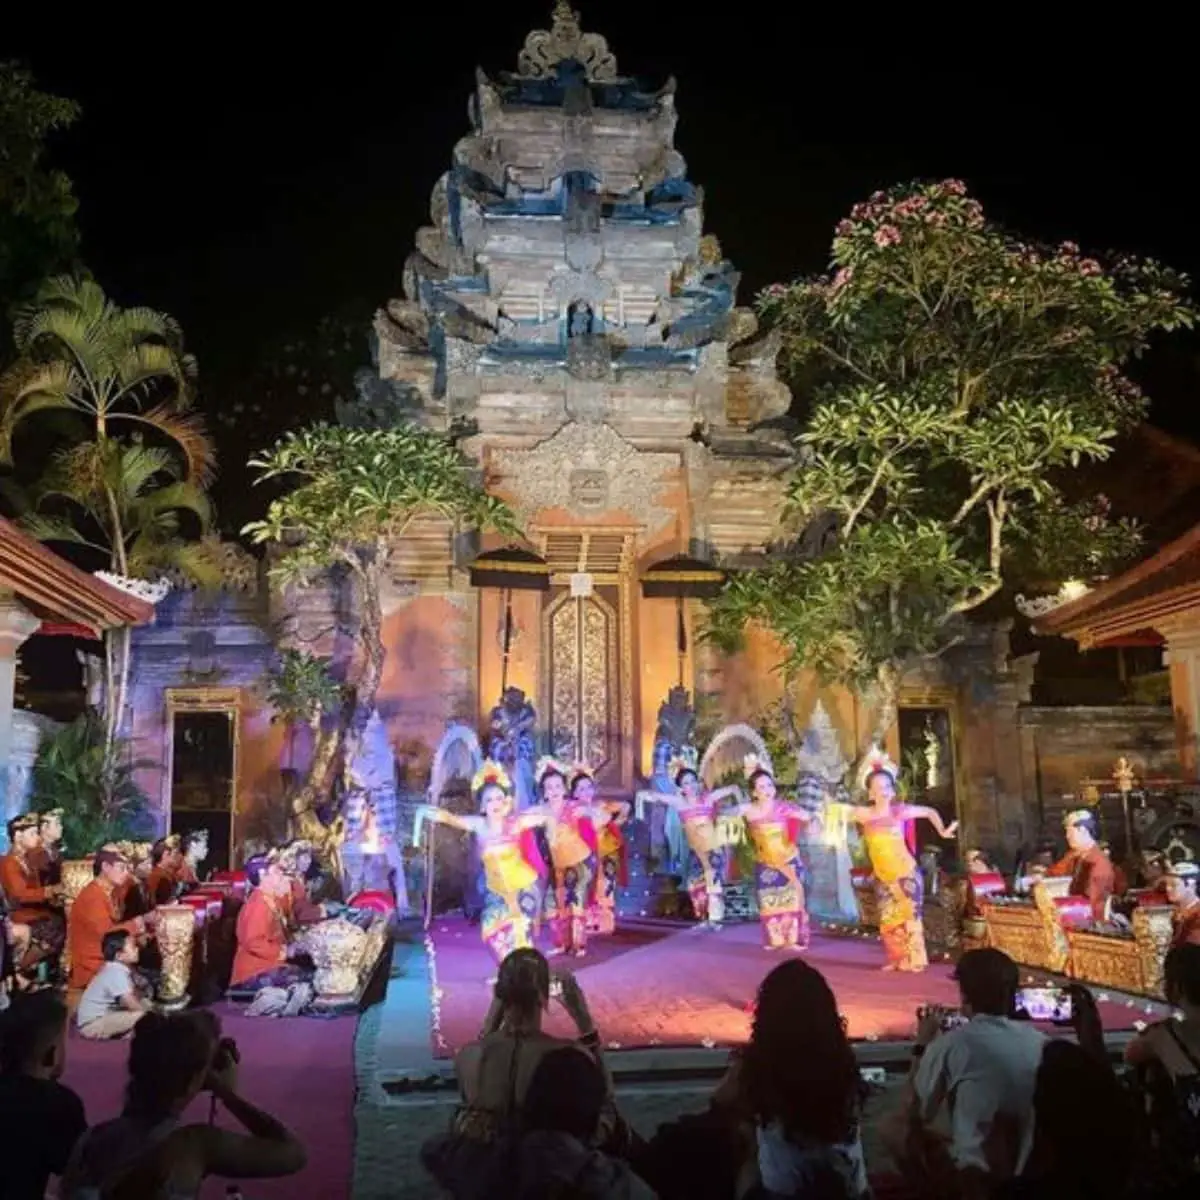 The group of performers dancing Legong at Puri Saren Agung